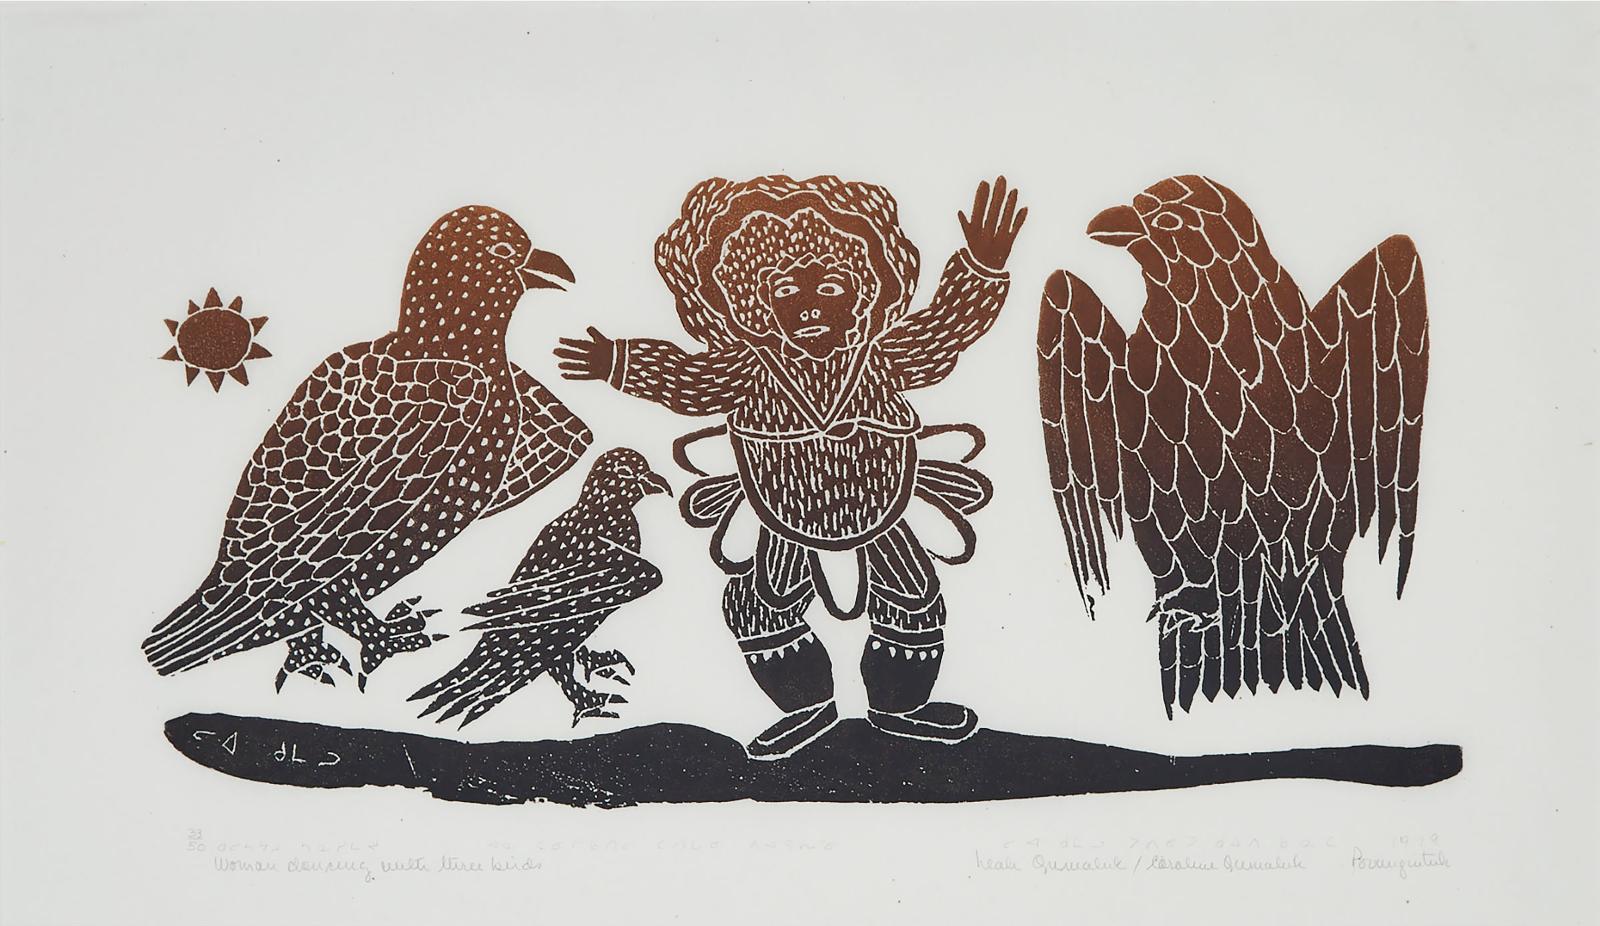 Leah Qumaluk (1934-1934) - Woman Dancing With Birds